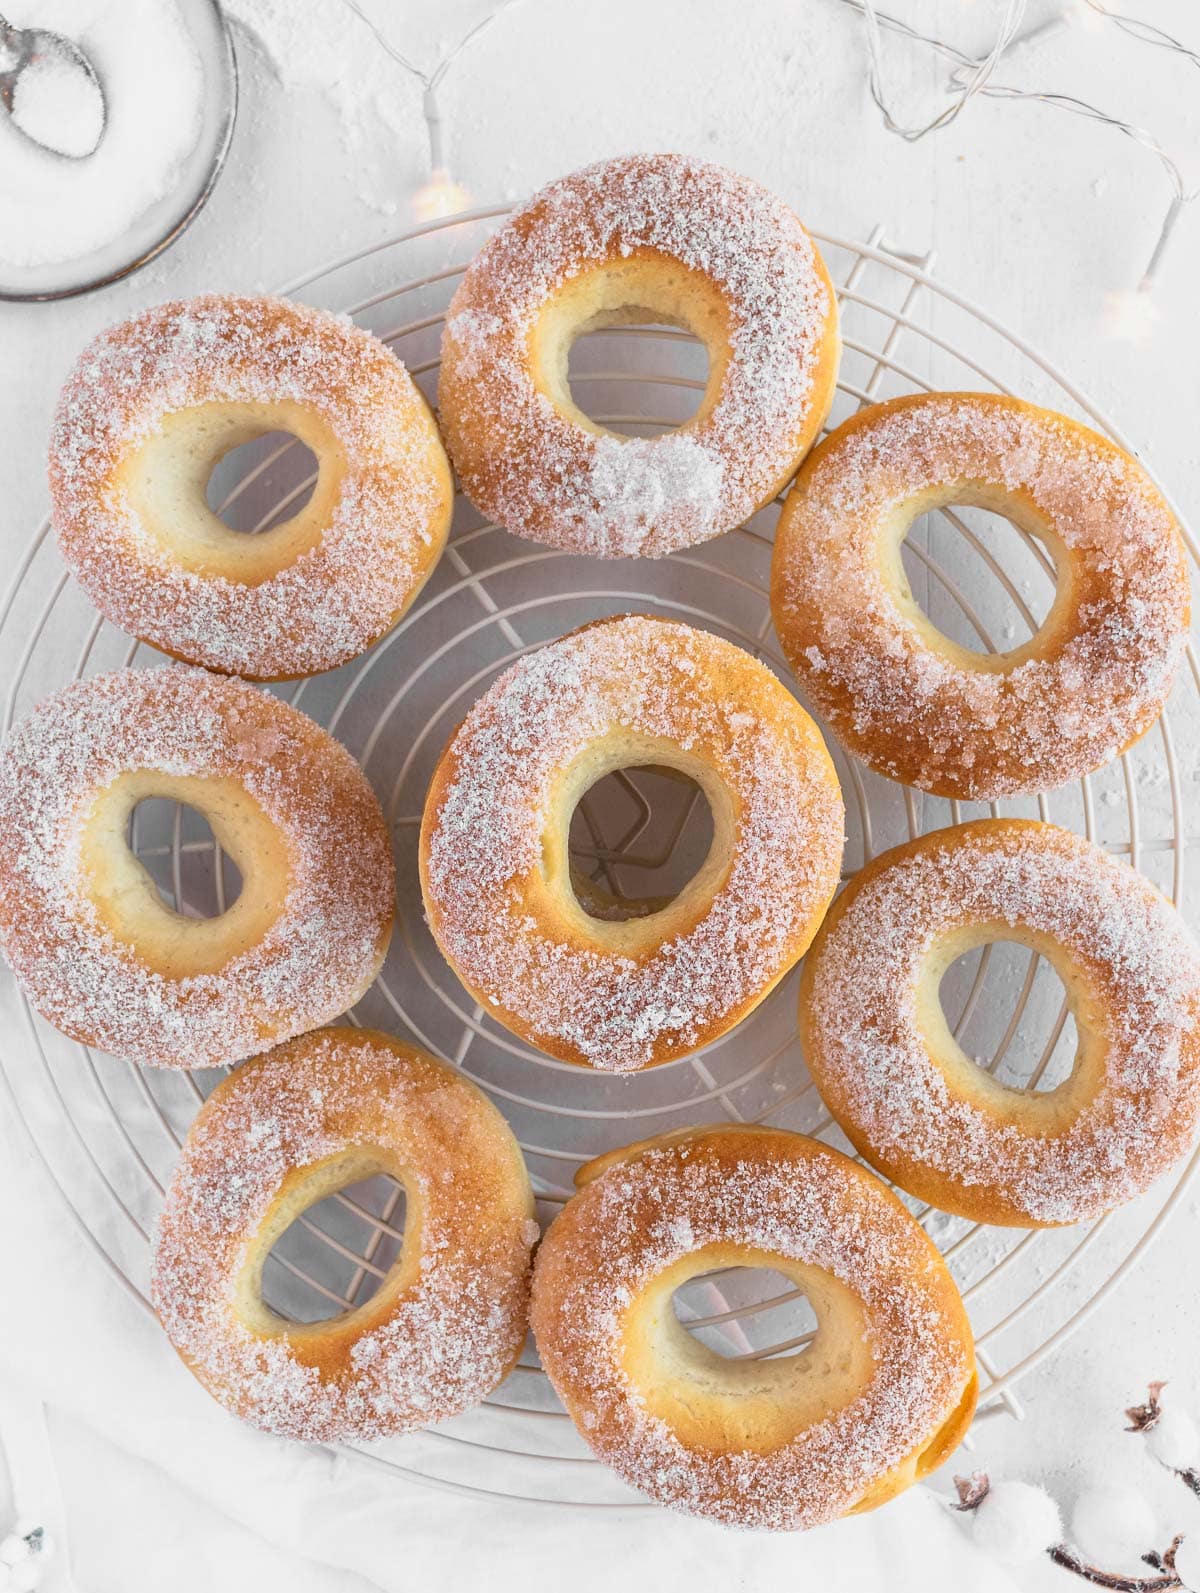 oven-baked vegan donuts